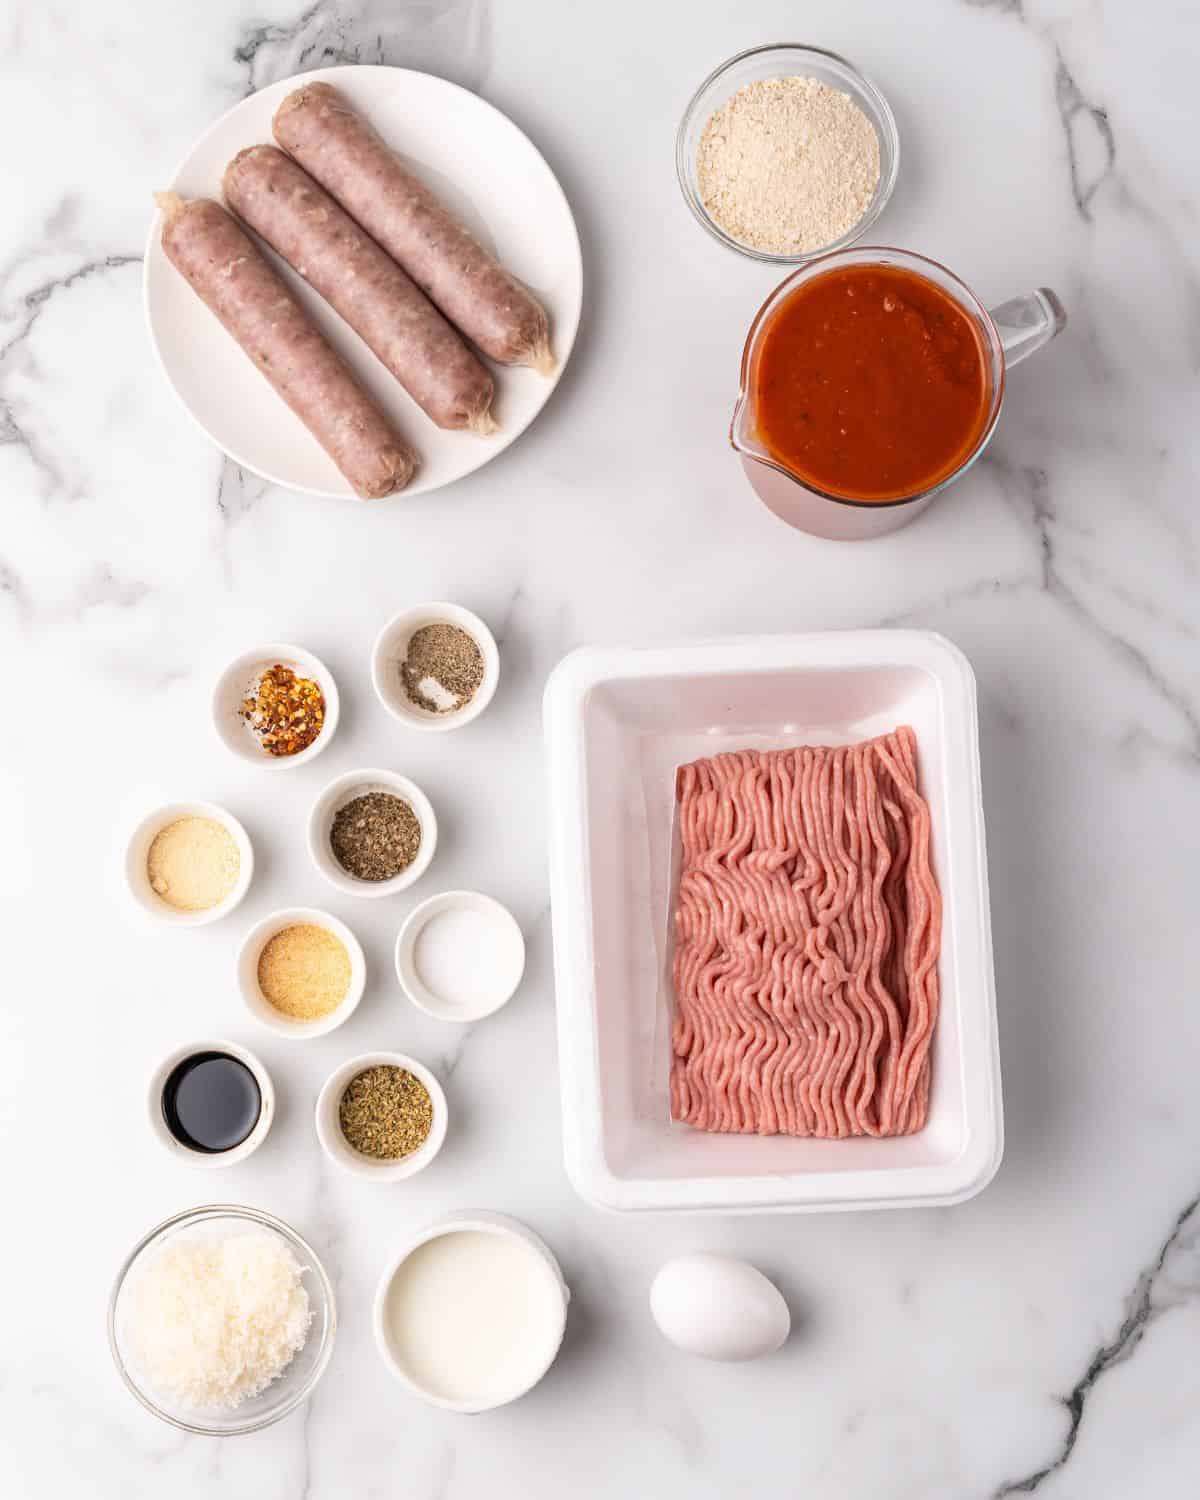 ingredients to make slow cooker turkey meatballs